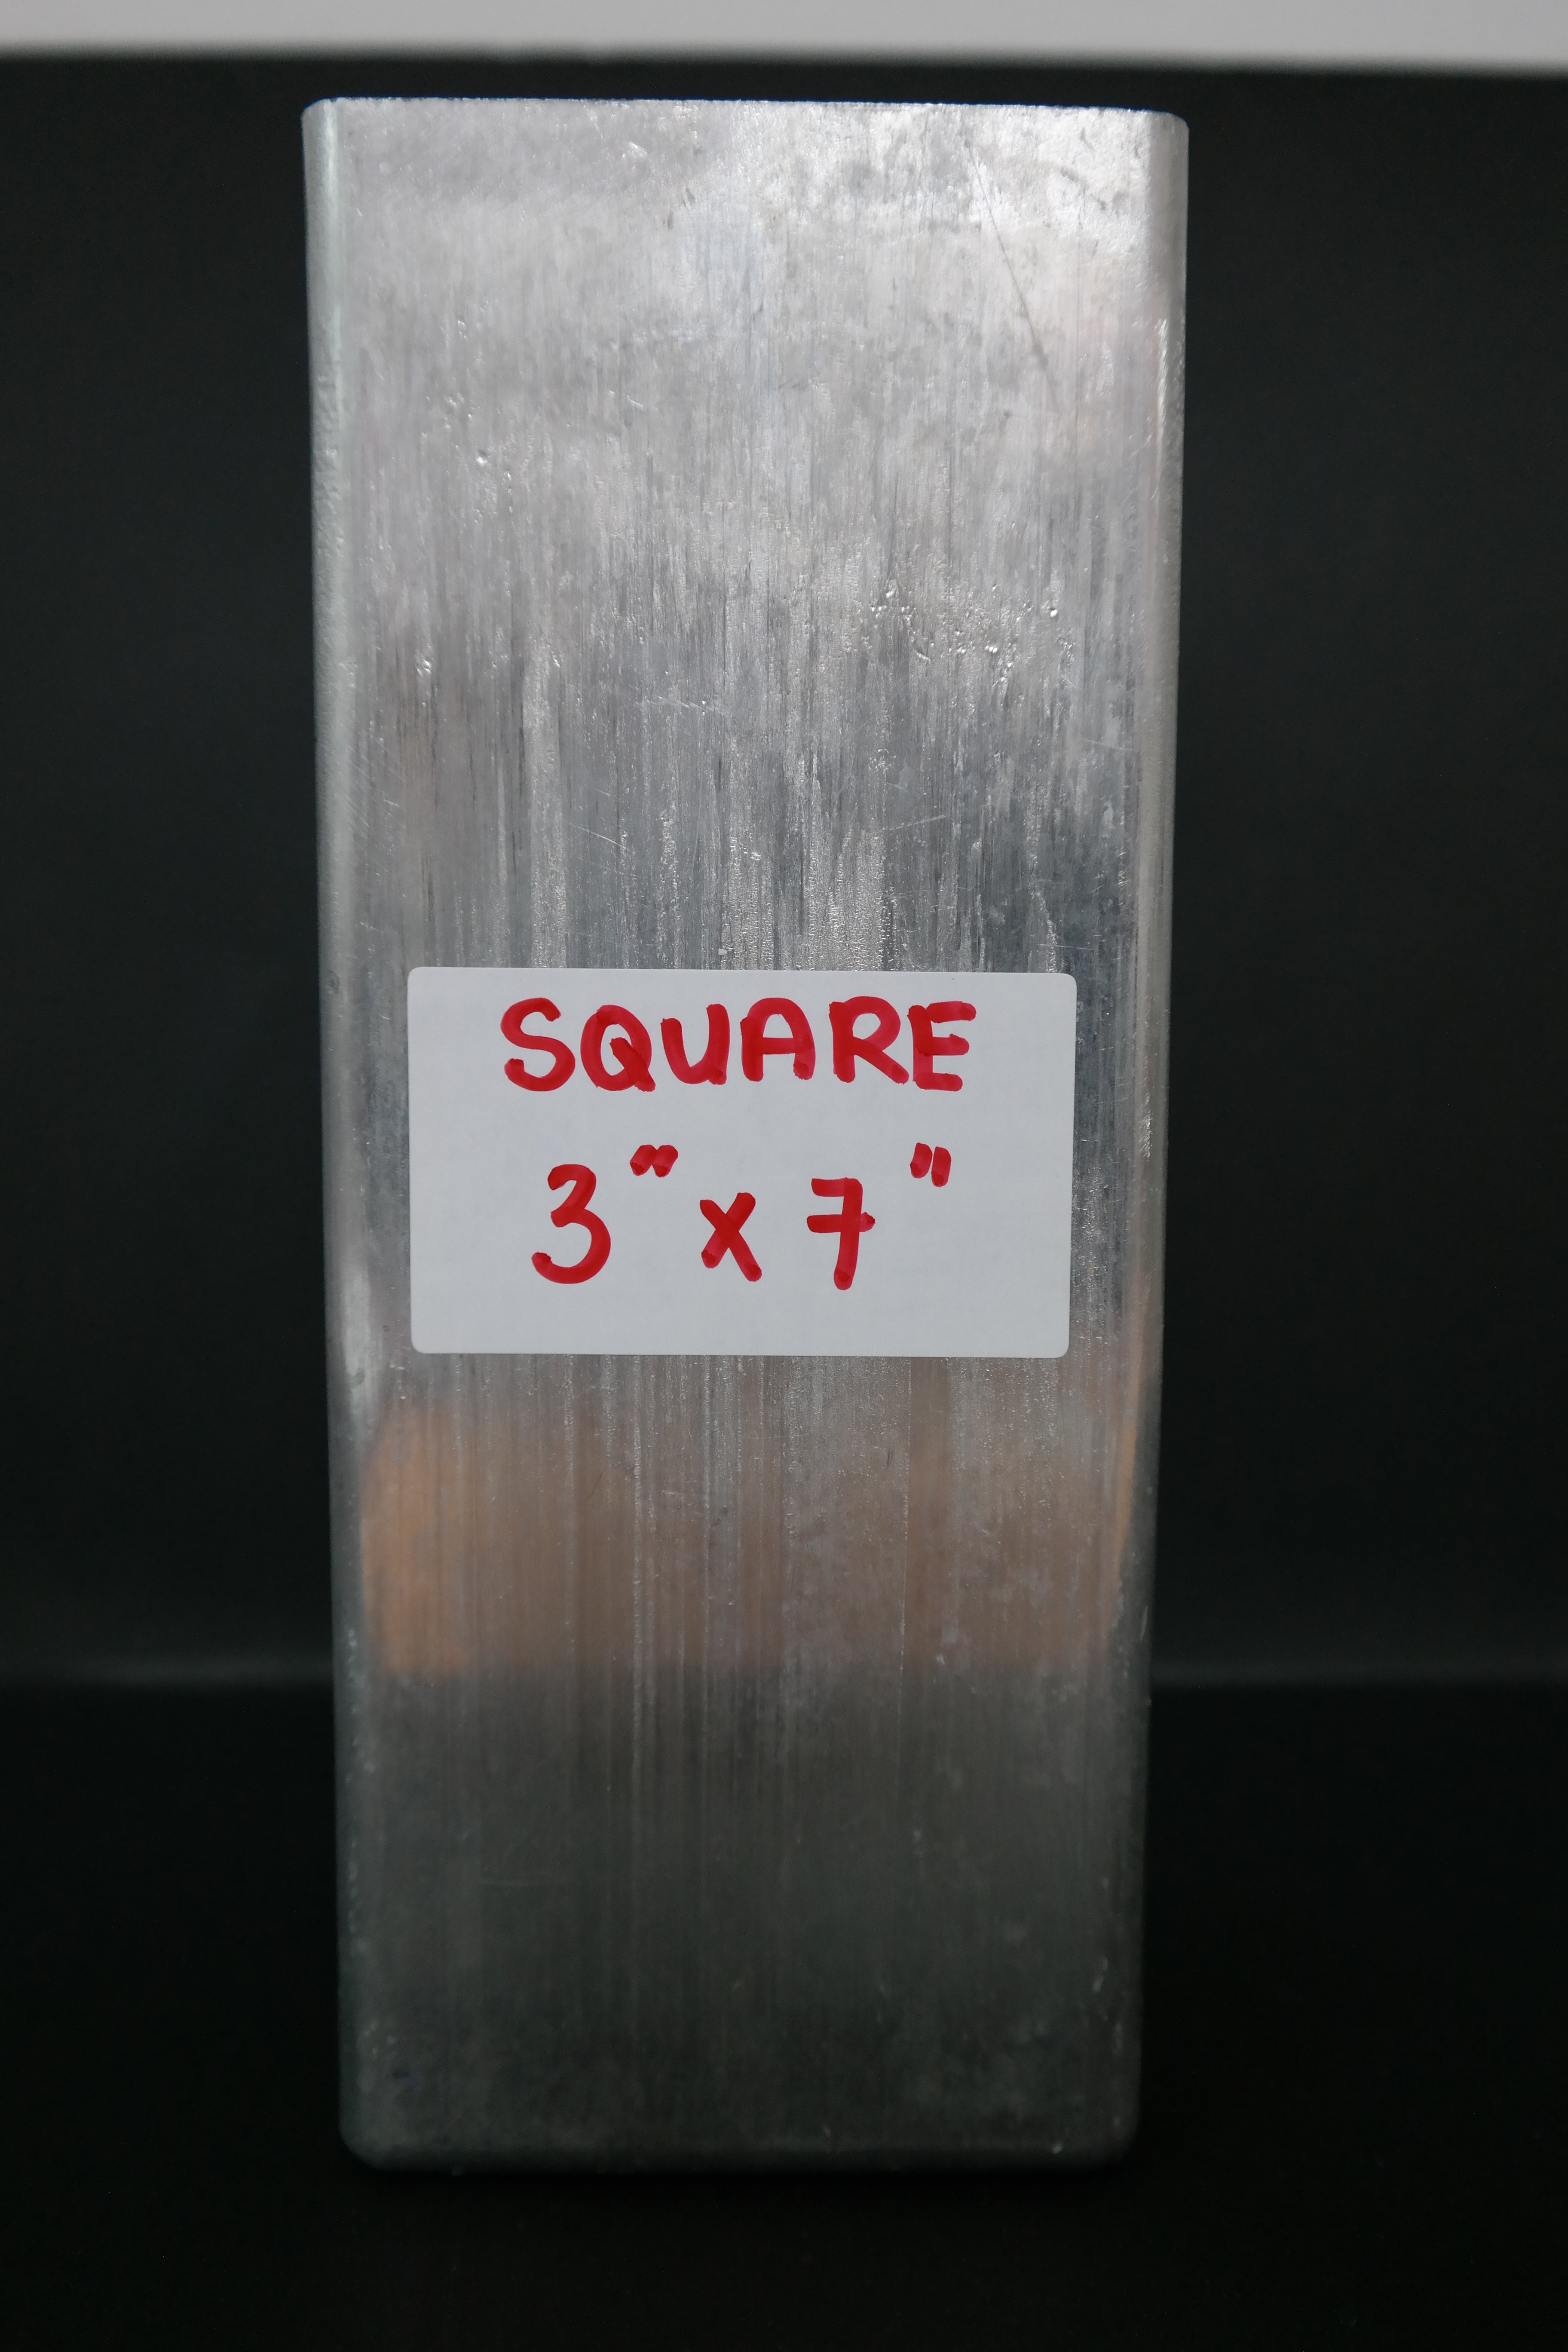 Square Aluminium Candle Mold